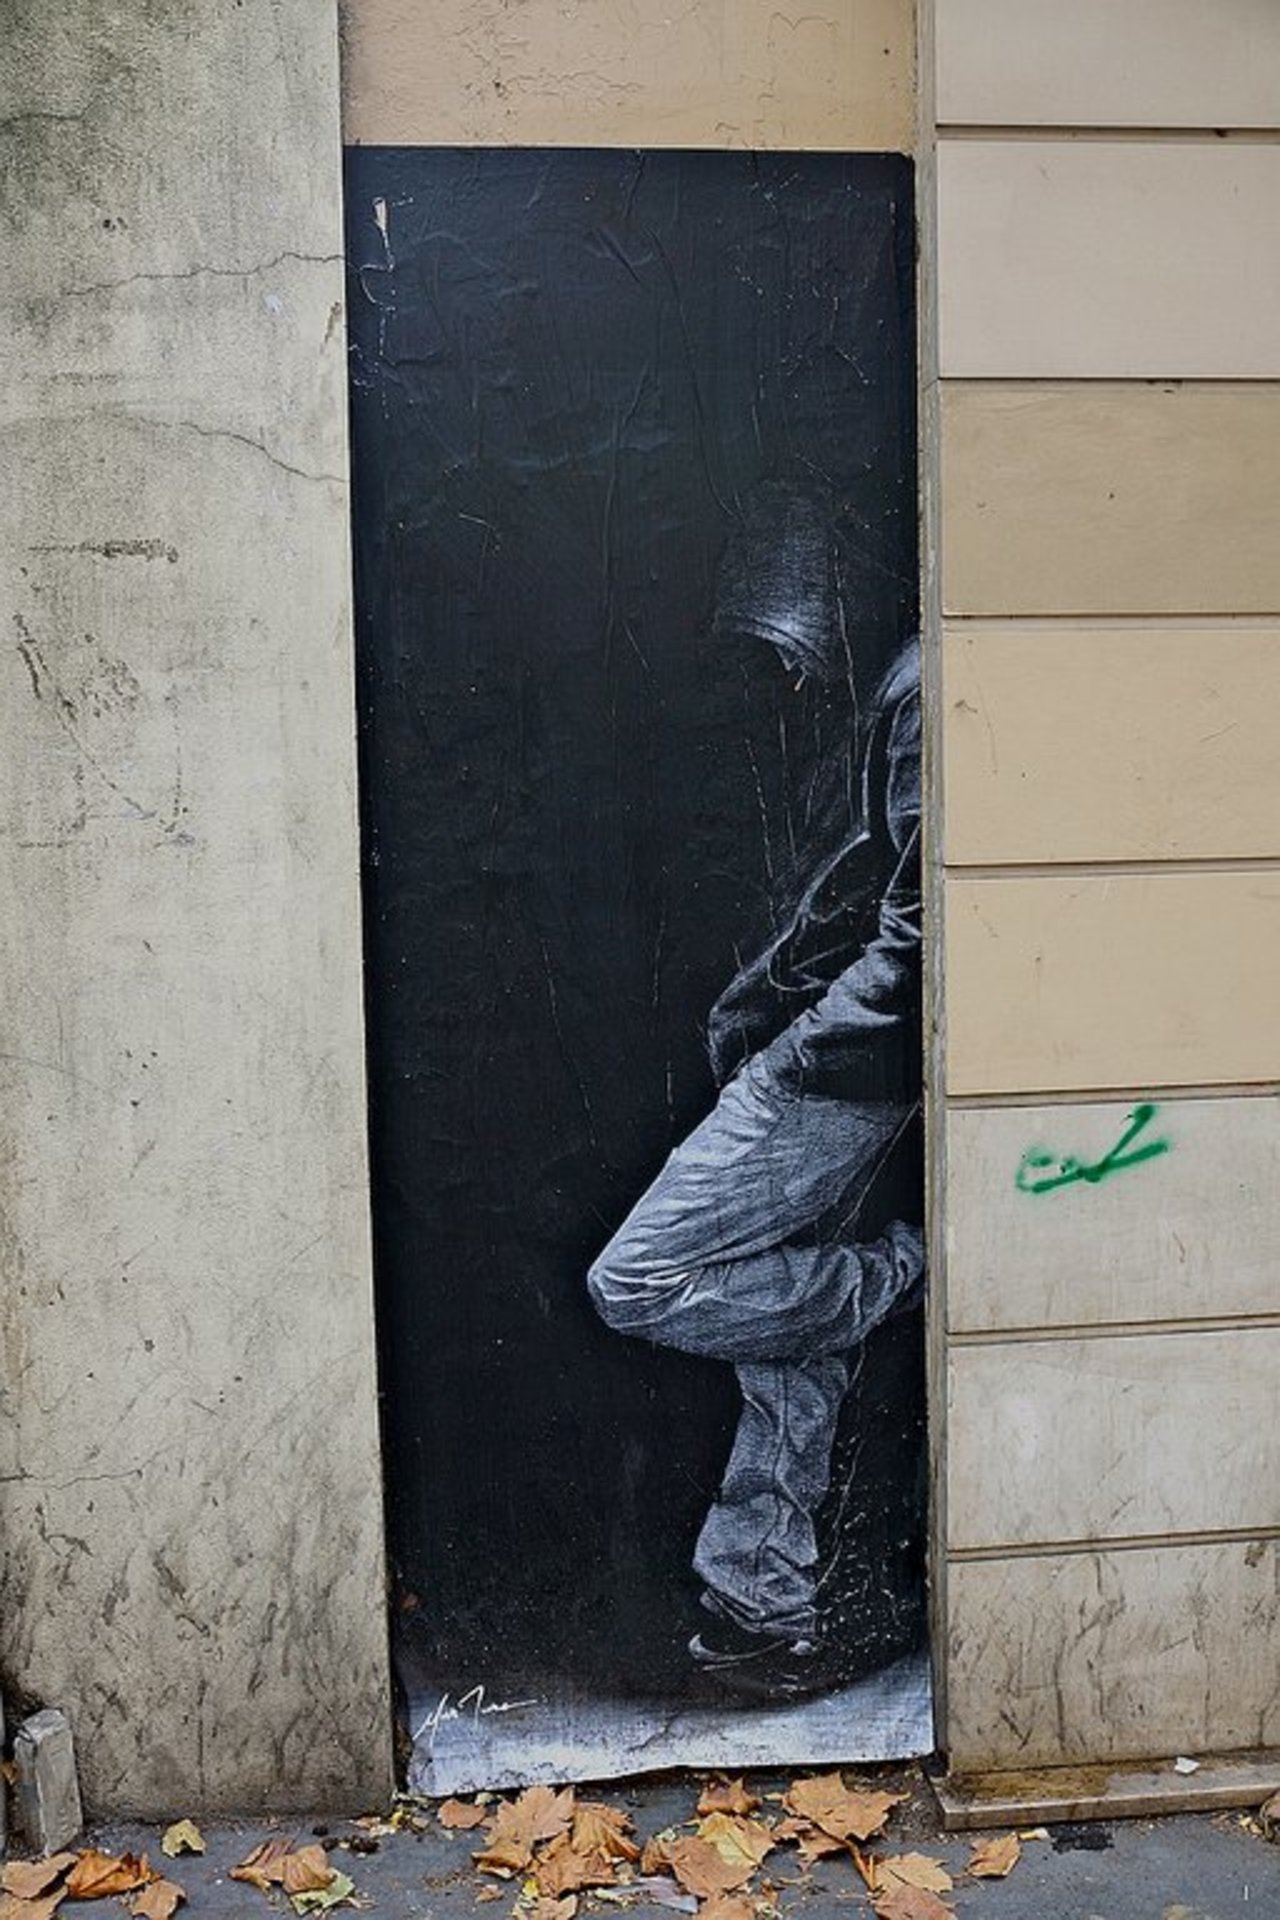 RT @urbacolors: Street Art by anonymous in #Paris http://www.urbacolors.com #art #mural #graffiti #streetart https://t.co/BdPHk4AHN4